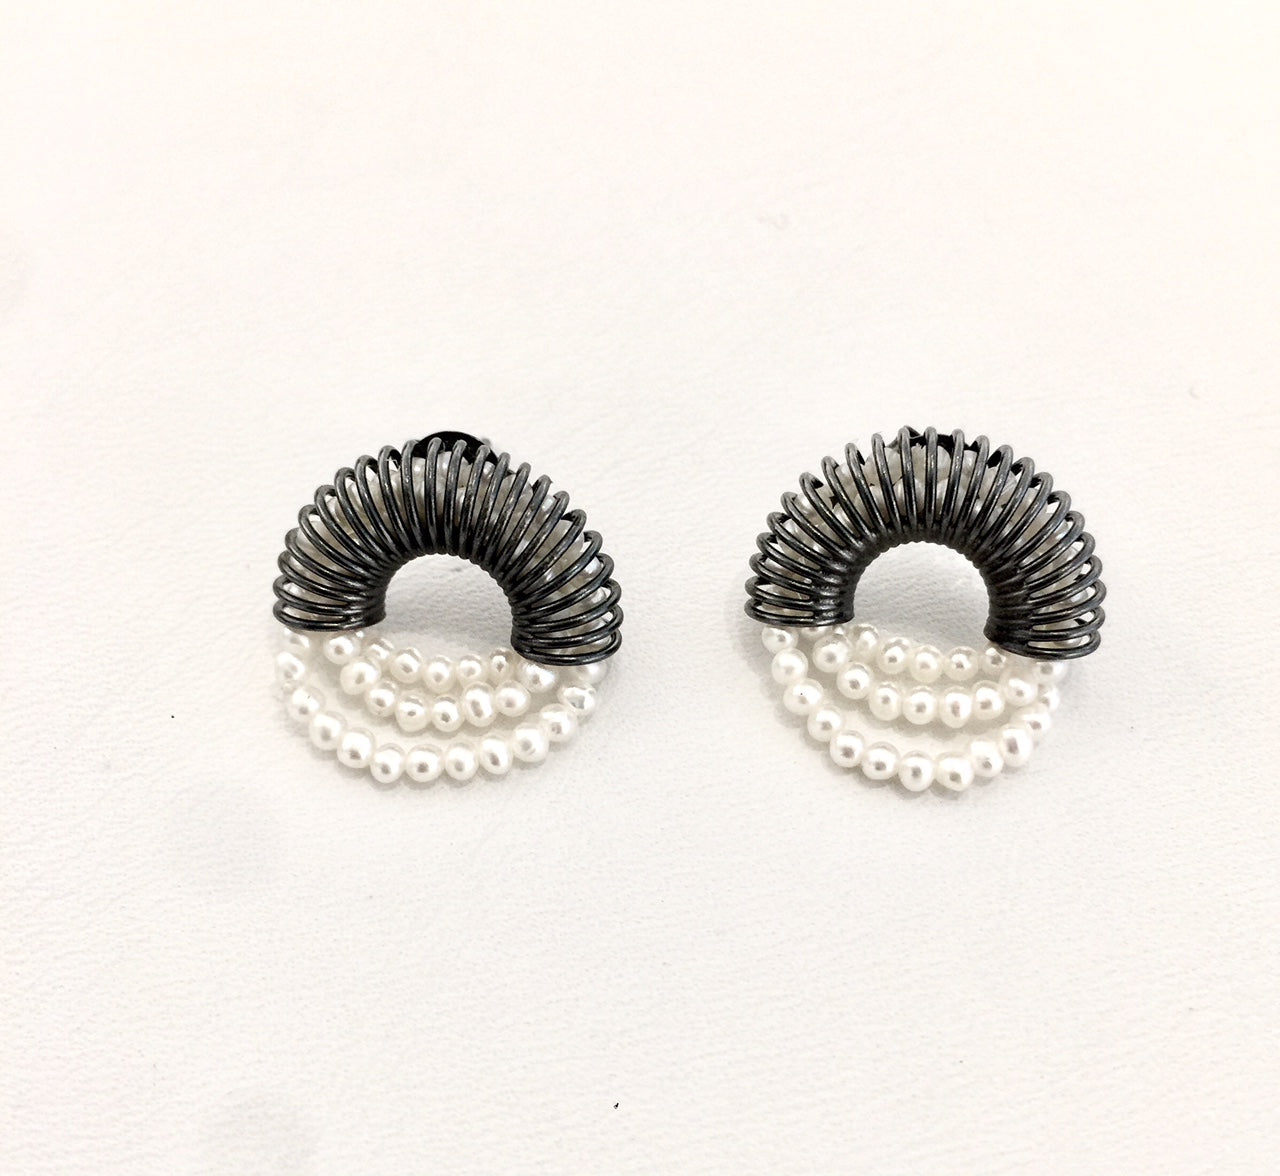 Freshwater Pearls Oxidized Silver Post Earrings